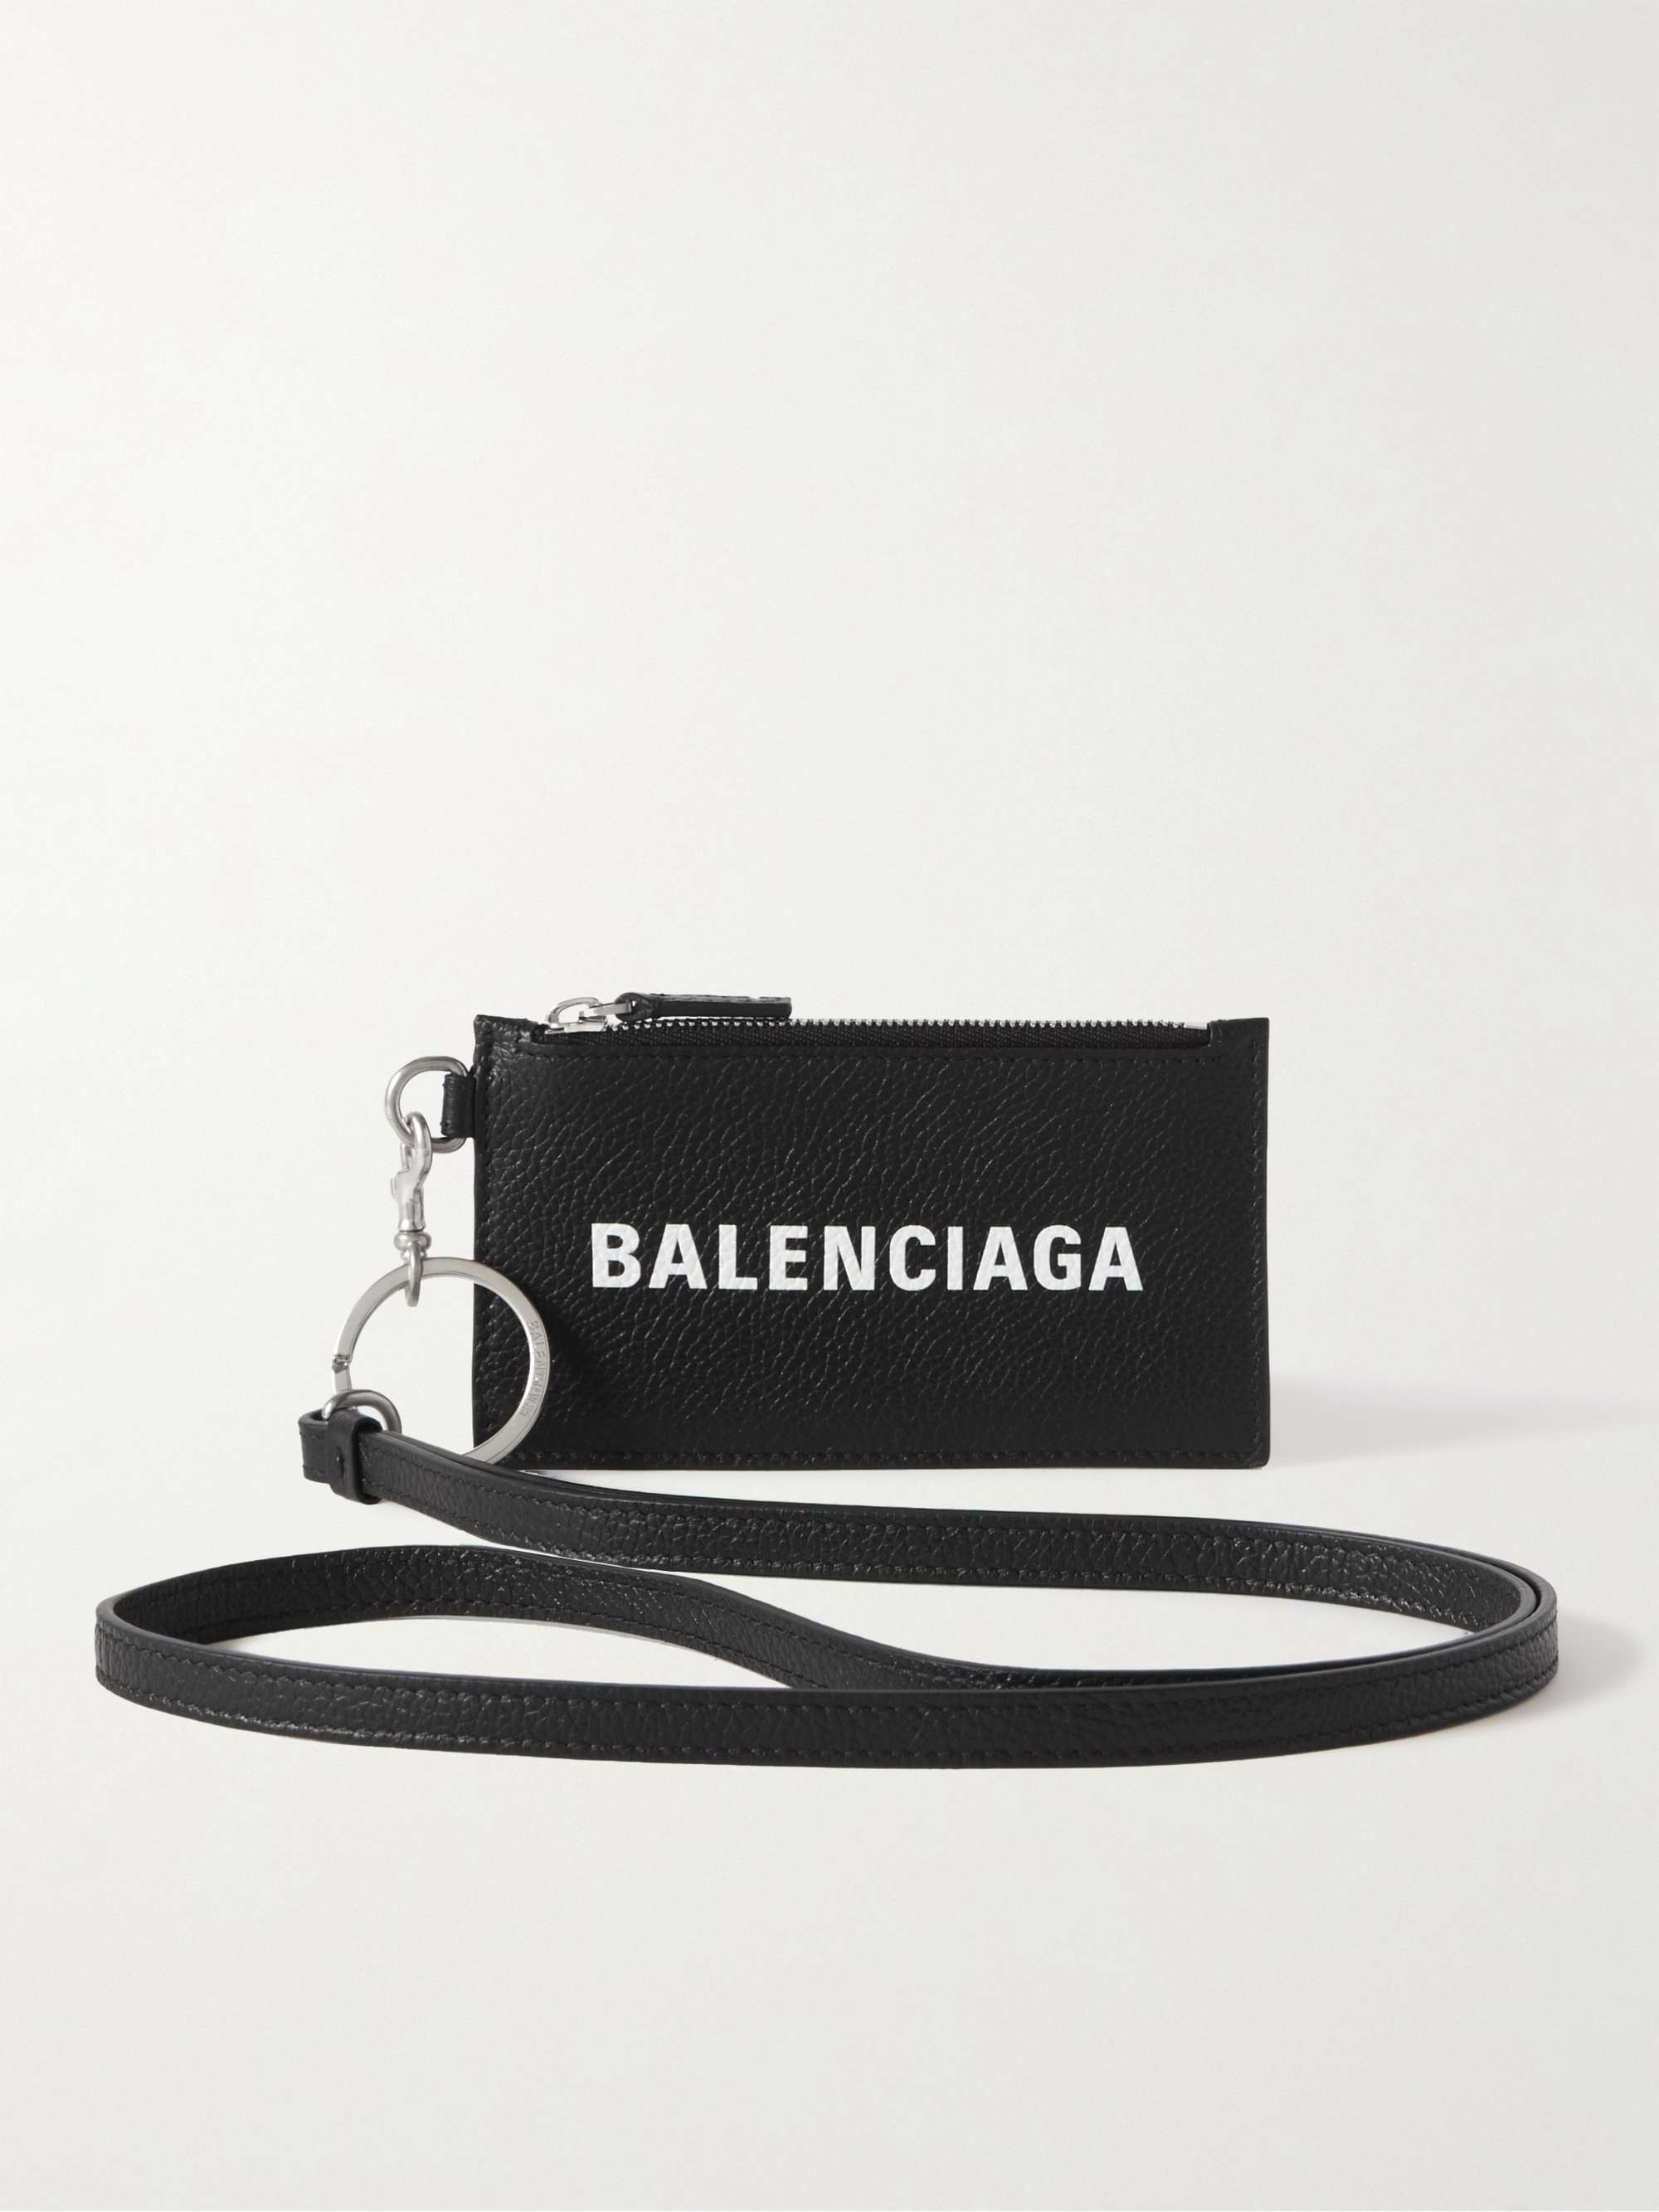 Balenciaga Cash Magnet 2 Card Slots Phone Card Holder BlackWhite in  Grained Calfskin Leather  US